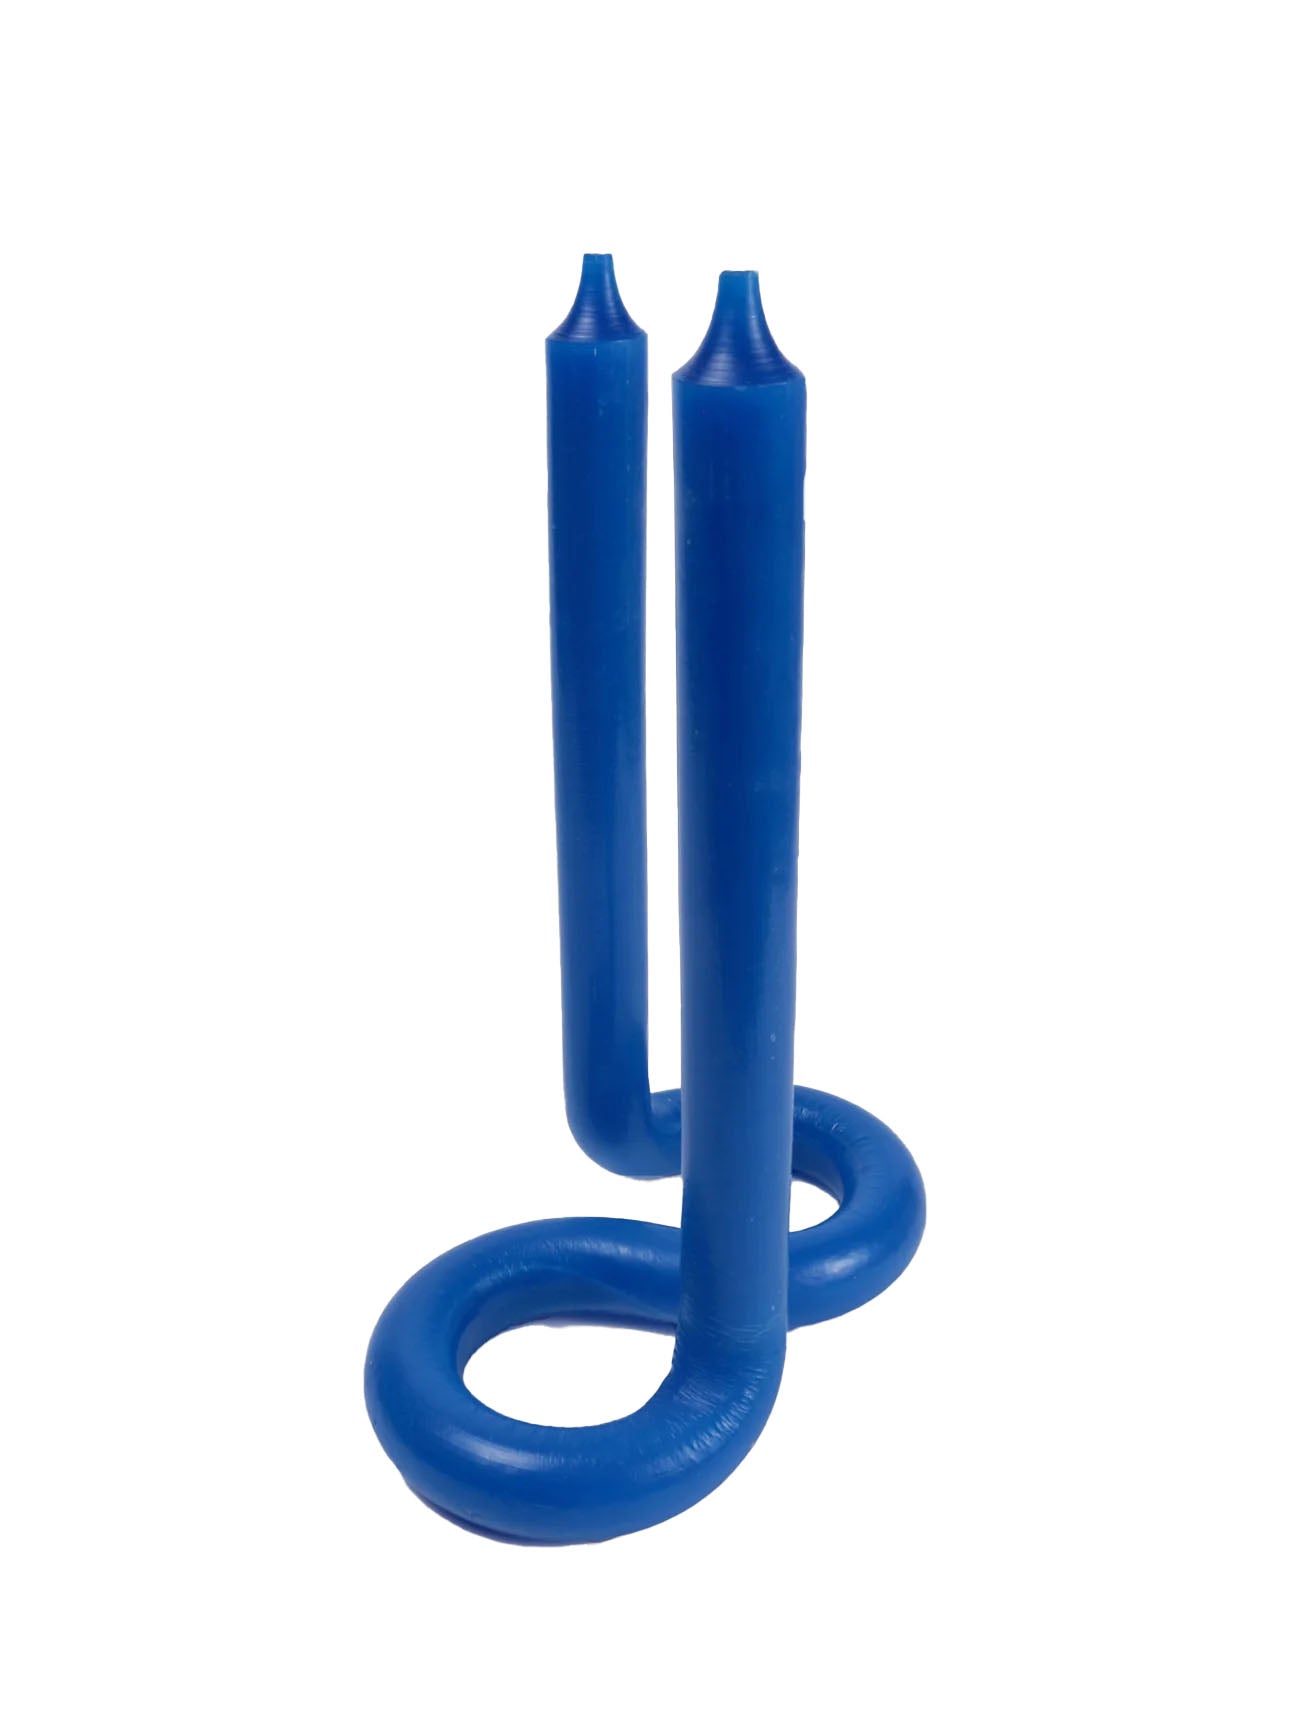 Twist Candle Sticks by Lex Pott, Royal Blue